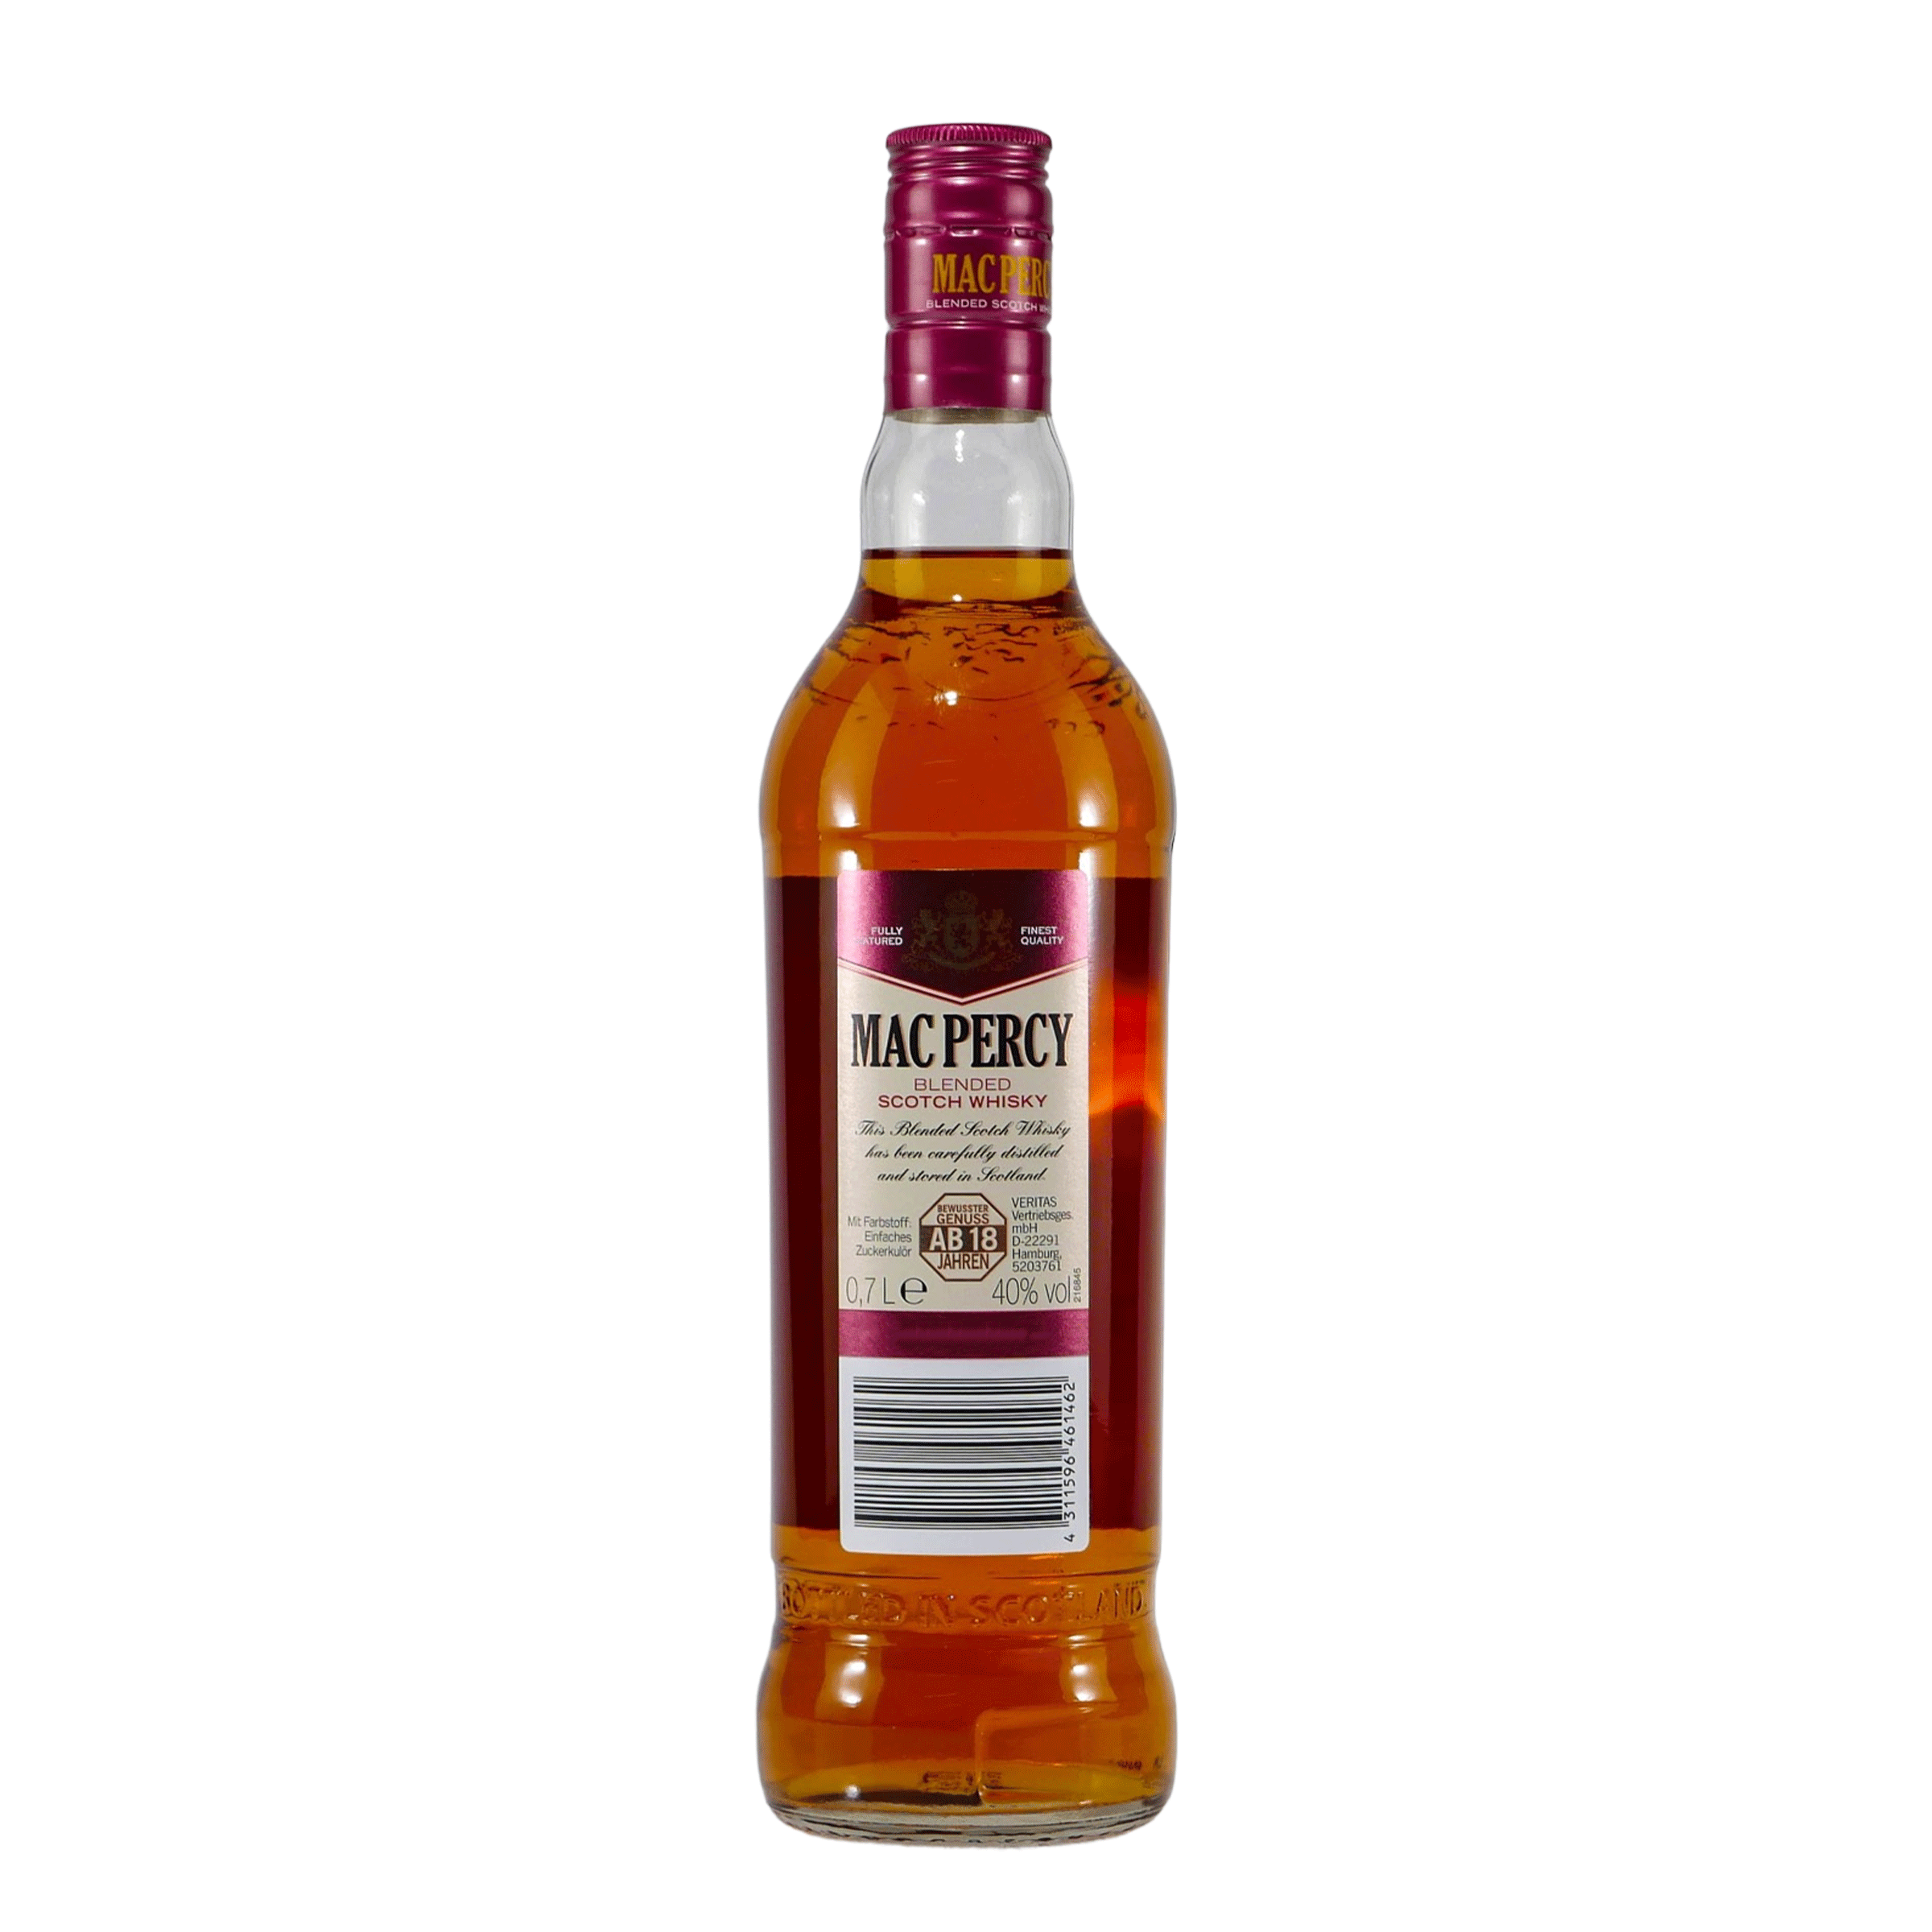 Mac Percy Blended Scotch Whisky